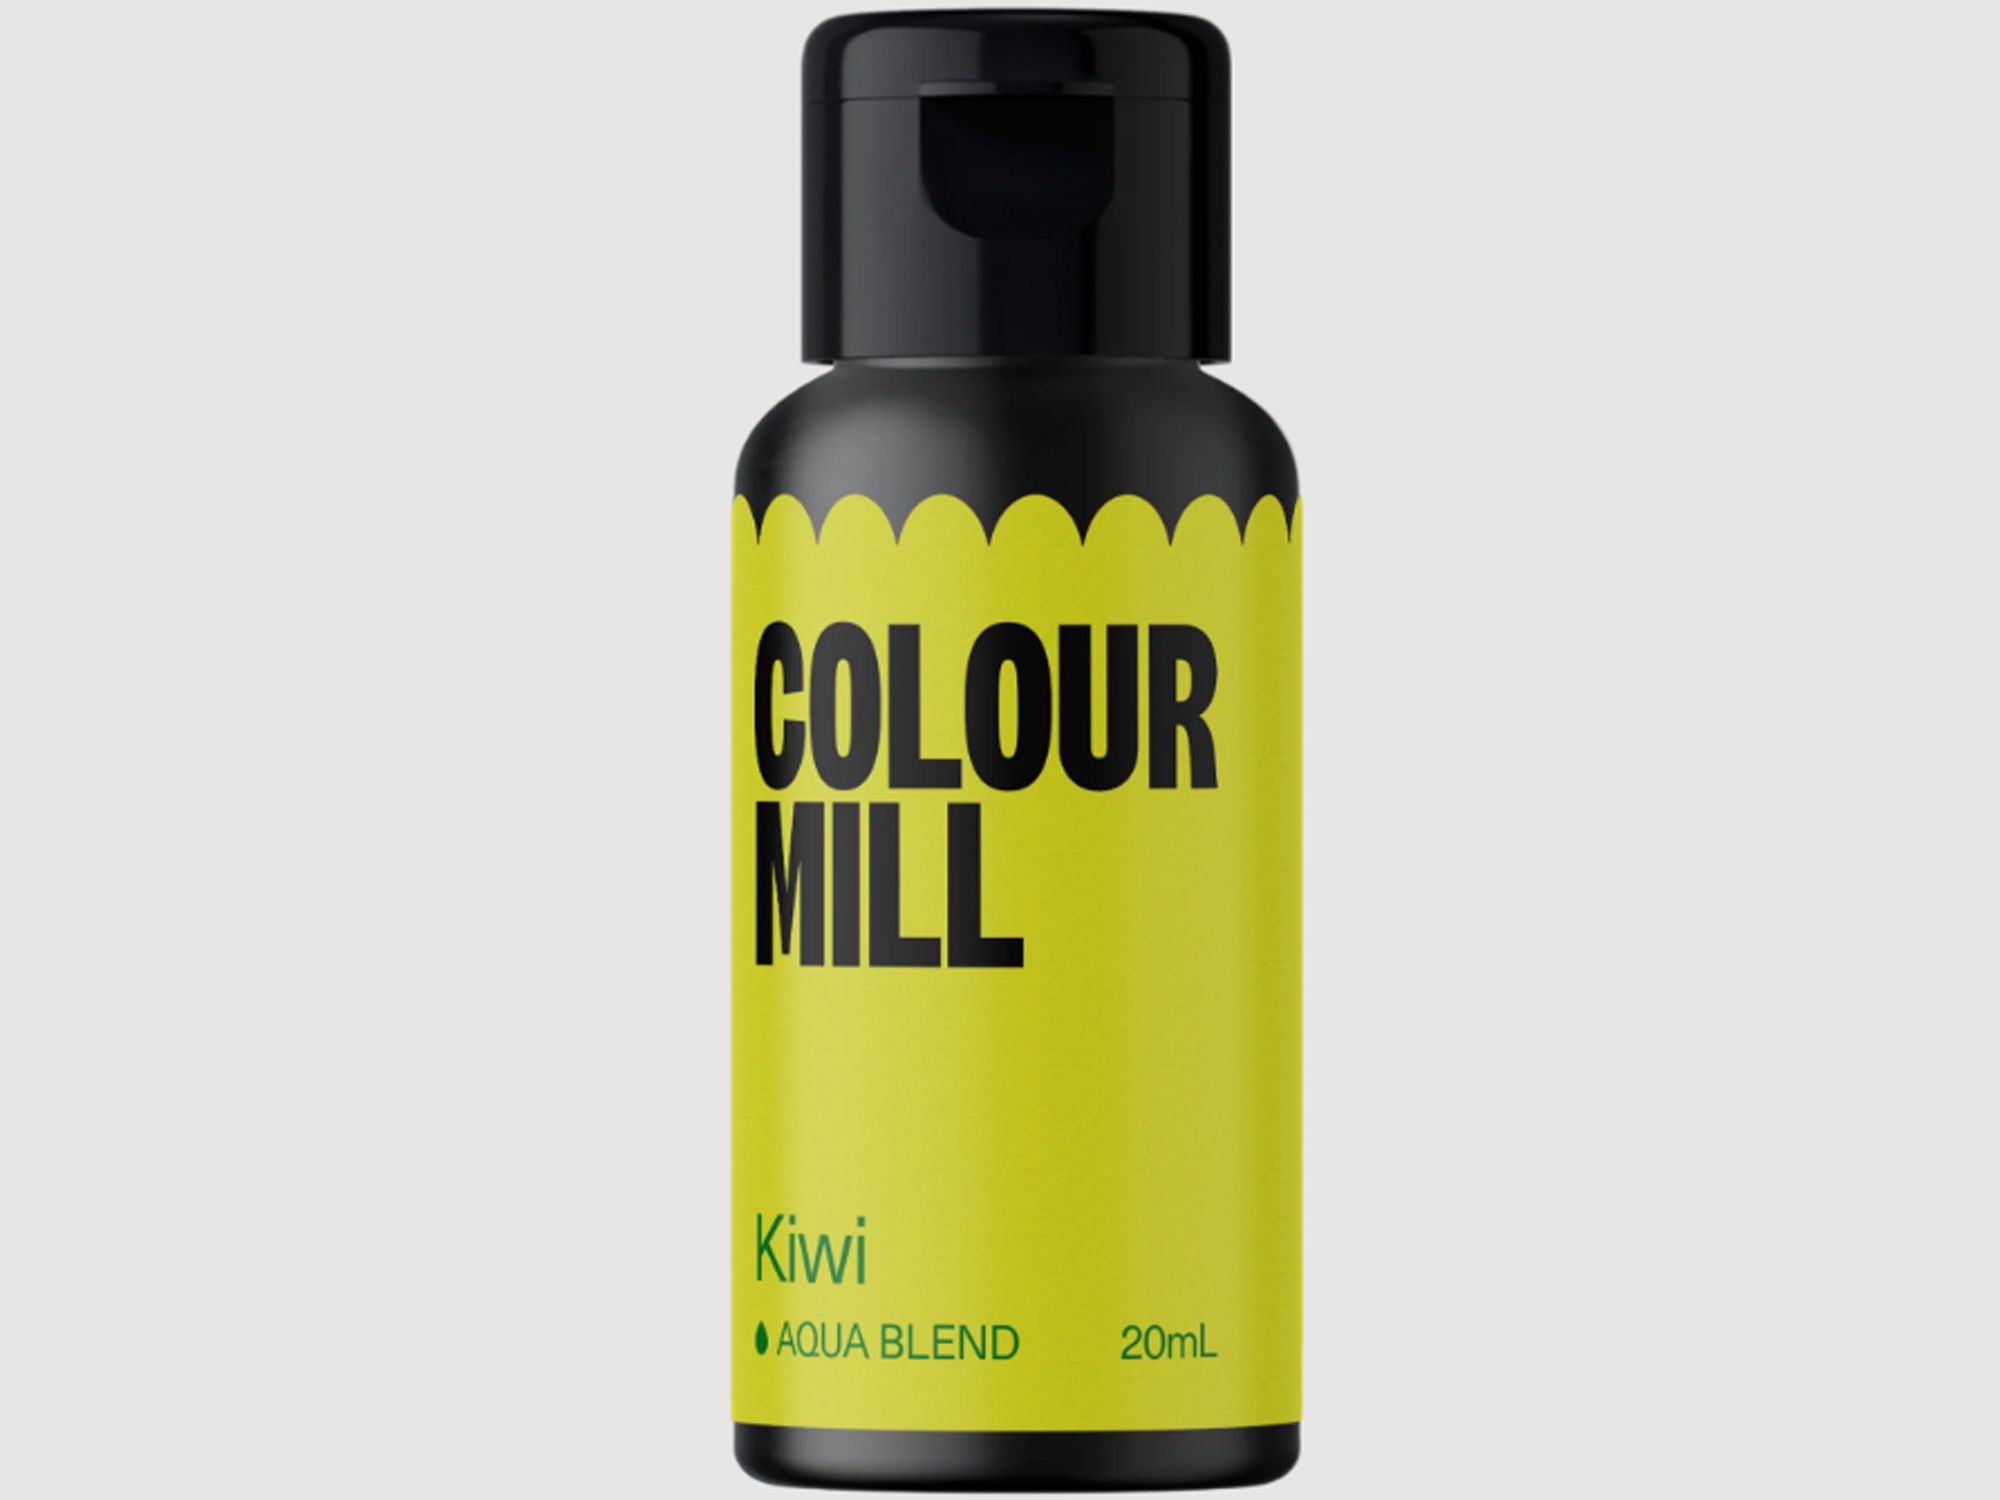 Colour Mill Kiwi (Aqua Blend) 20ml